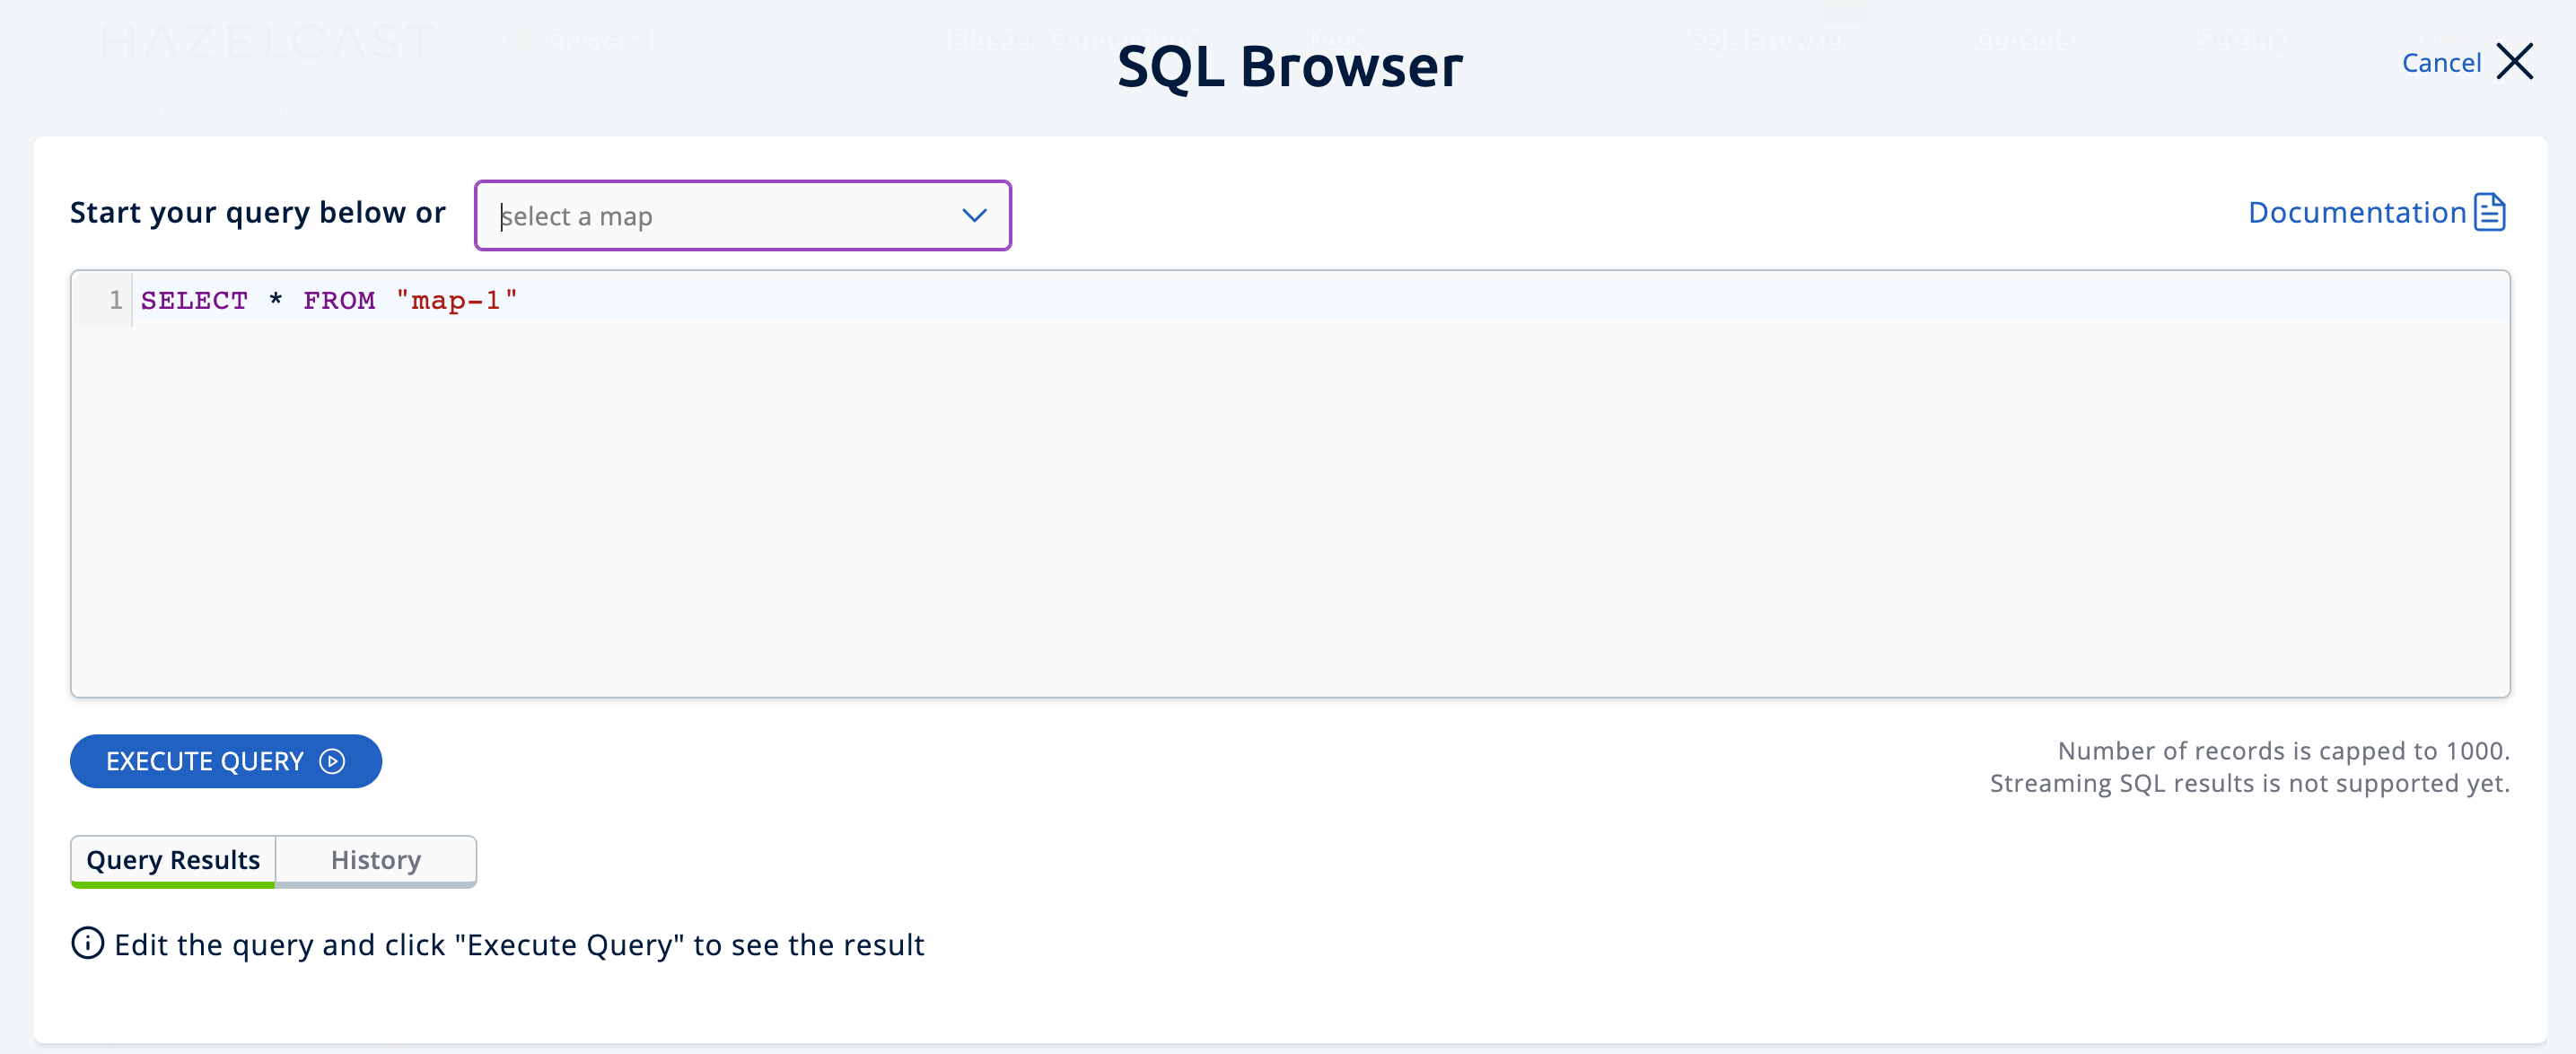 SQL Browser Window